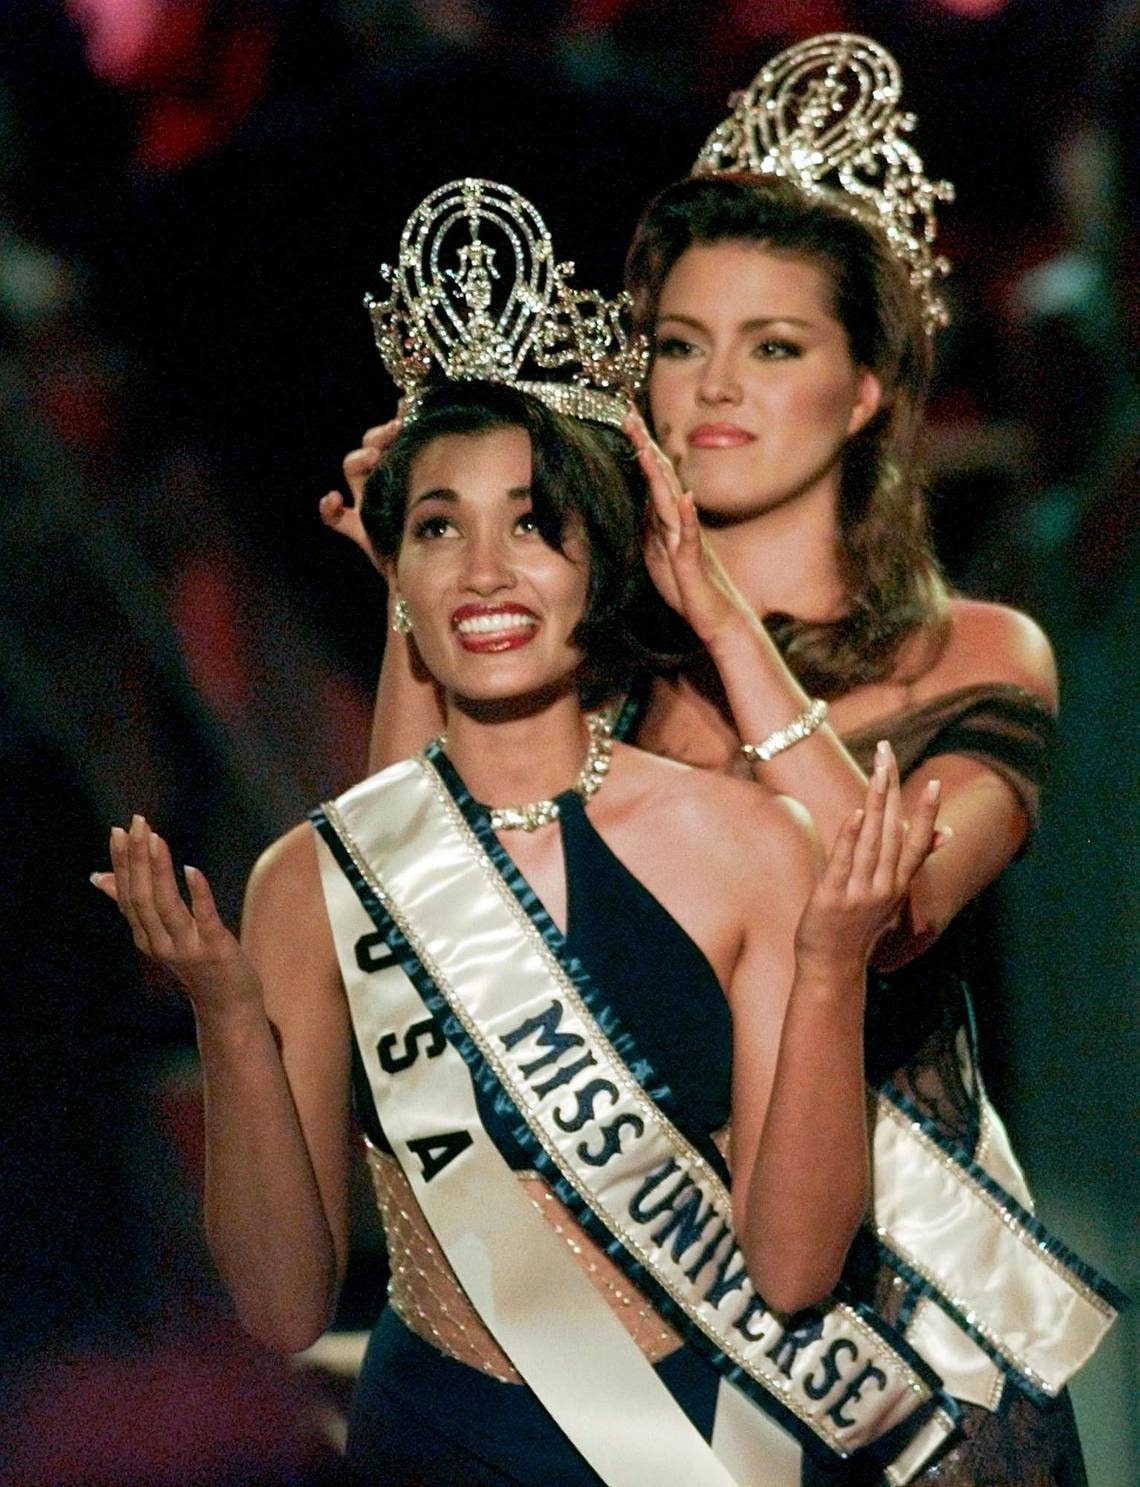 Brook Lee, Miss USA & Miss Universe 1997